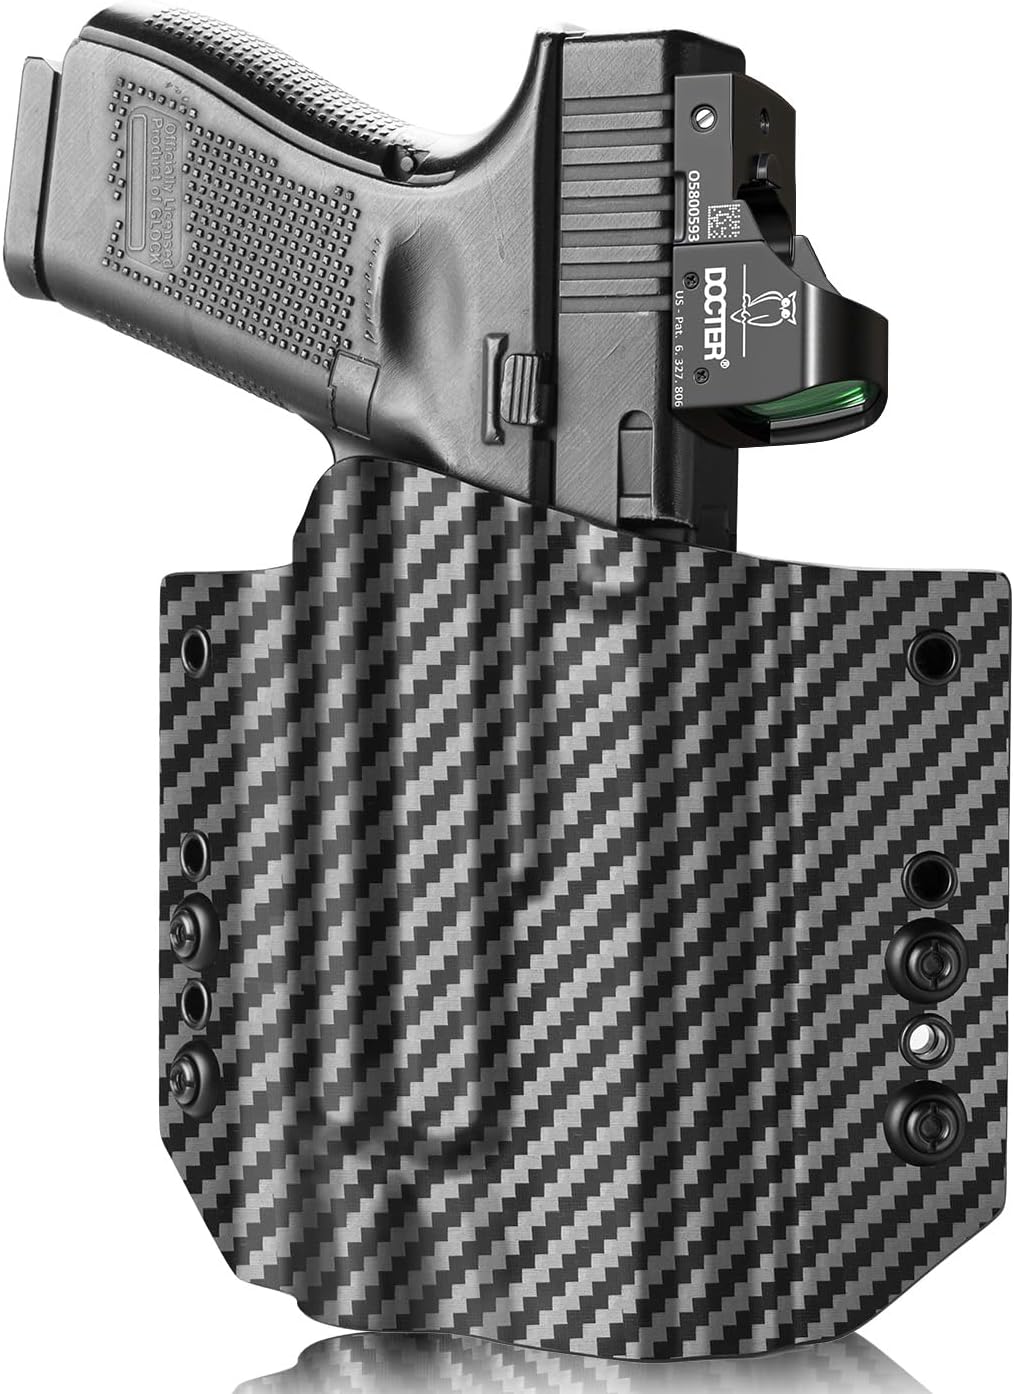 Kydex OWB Holster For Glock 19 19x Glock 23 25 32 Glock 17 22 31 Glock –  PoLe.Craft Holster